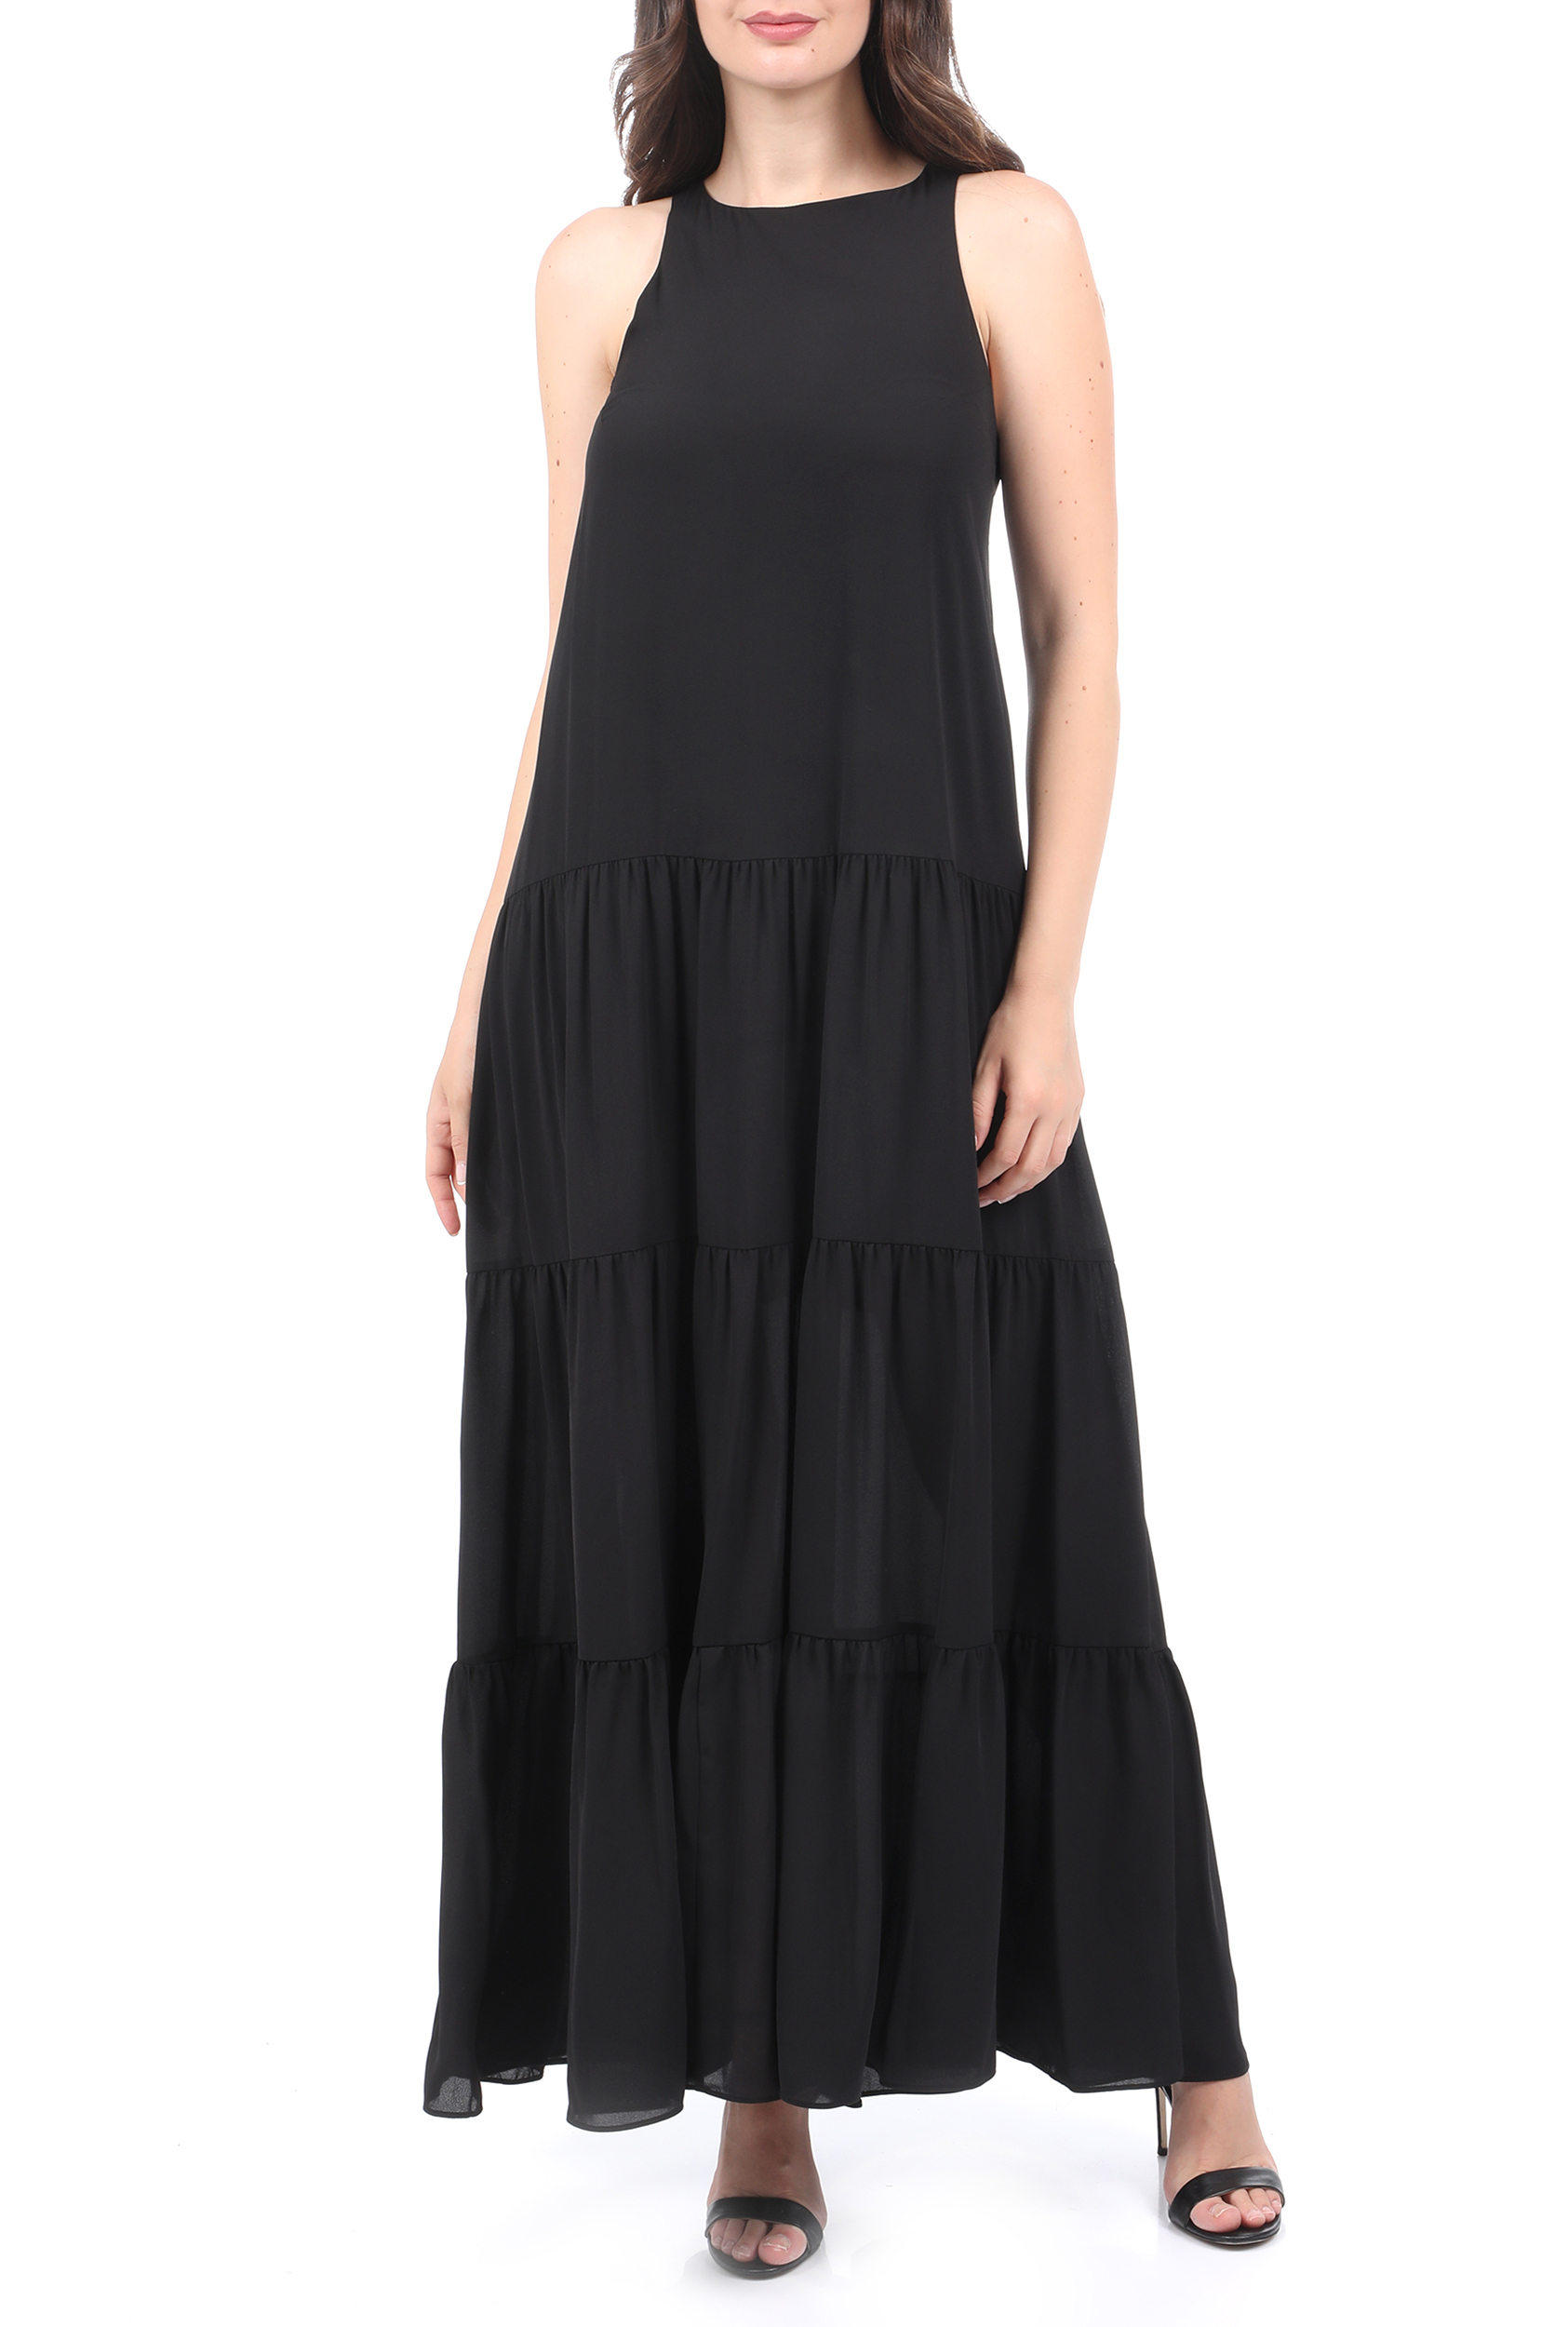 KOCCA – Γυναικειο maxi φορεμα KOCA JAYANI μαυρο